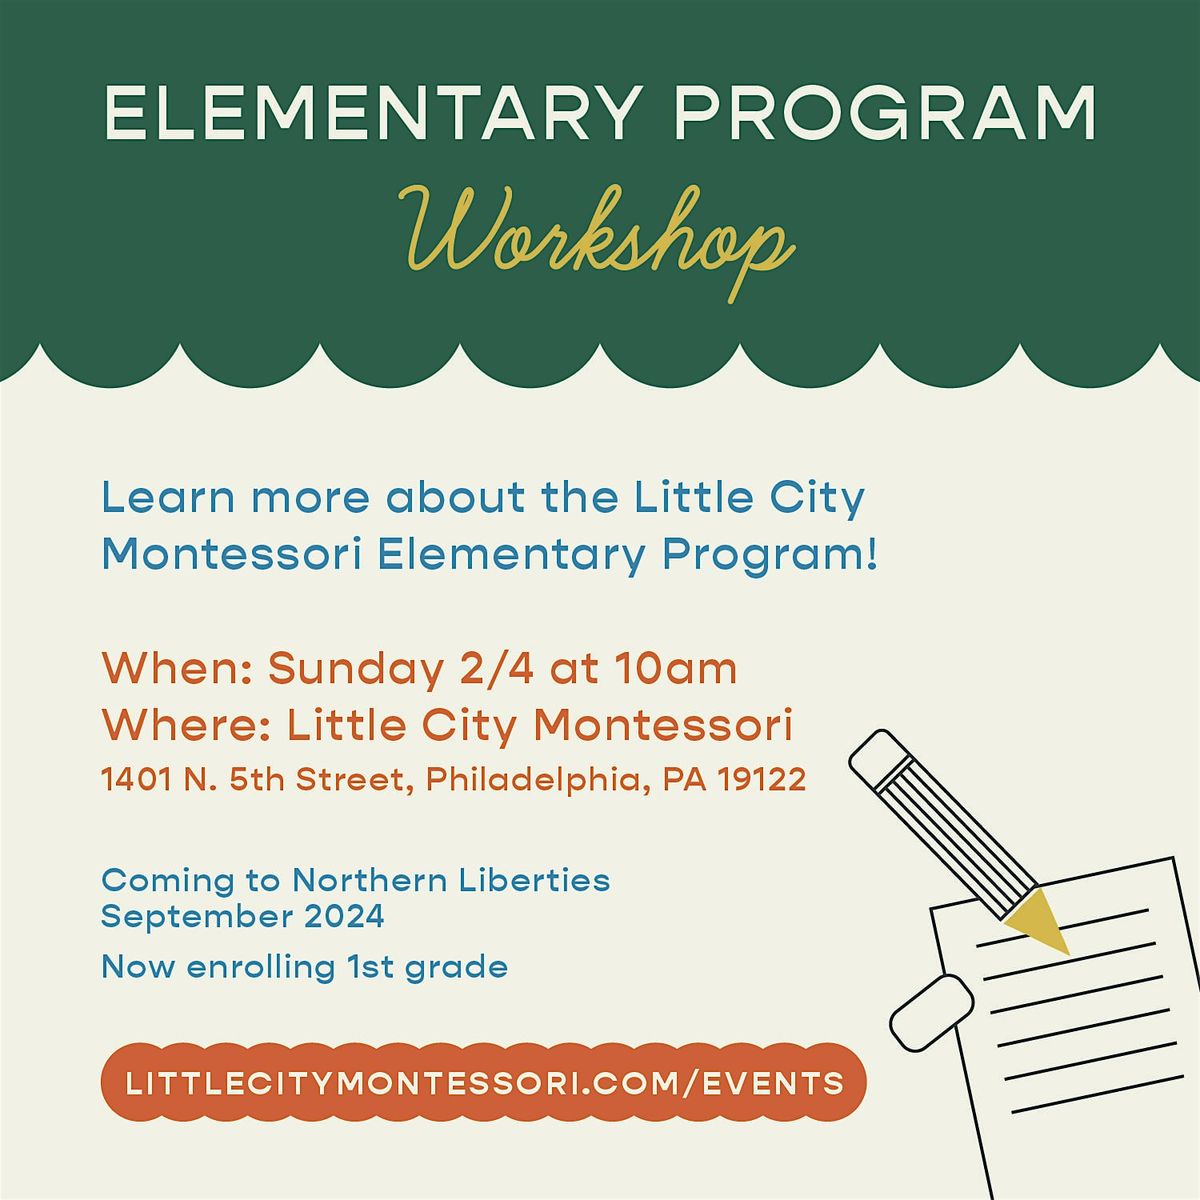 Elementary Program Information Session at Little City Montessori